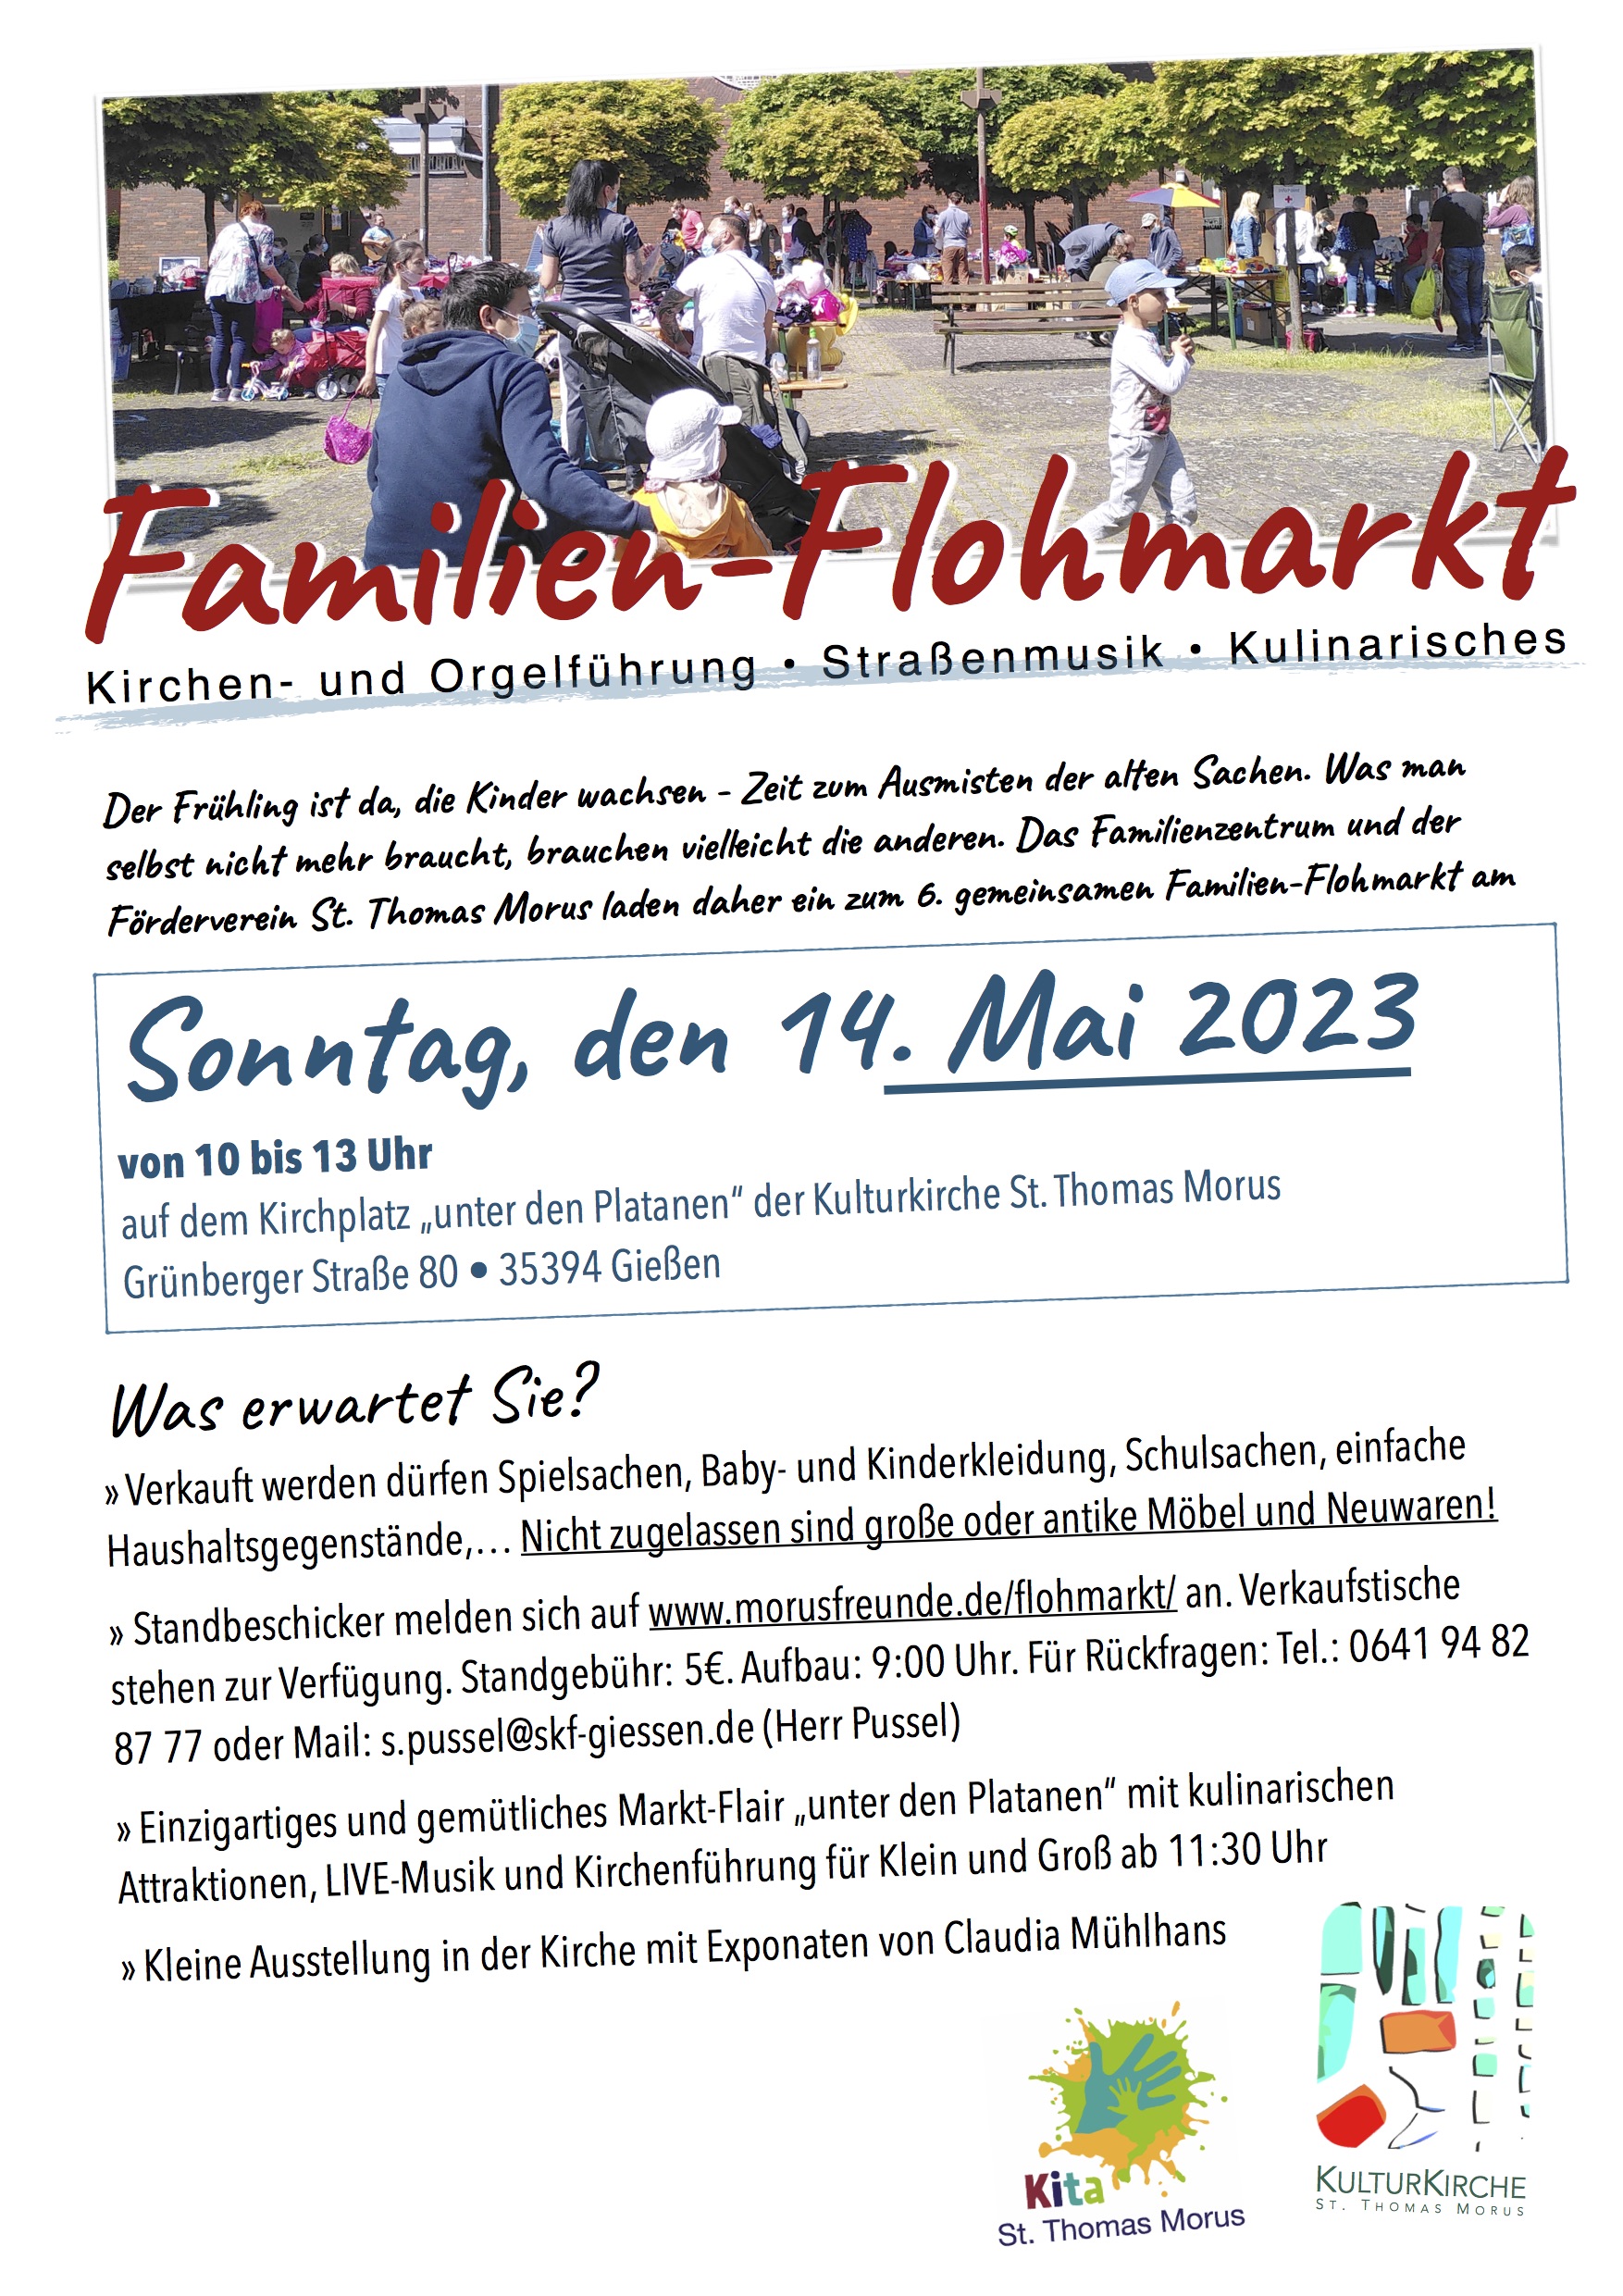 5. Familien-Flohmarkt am 14.5.23 von 10-13 Uhr (c) Förderverein St. Thomas Morus e.V.